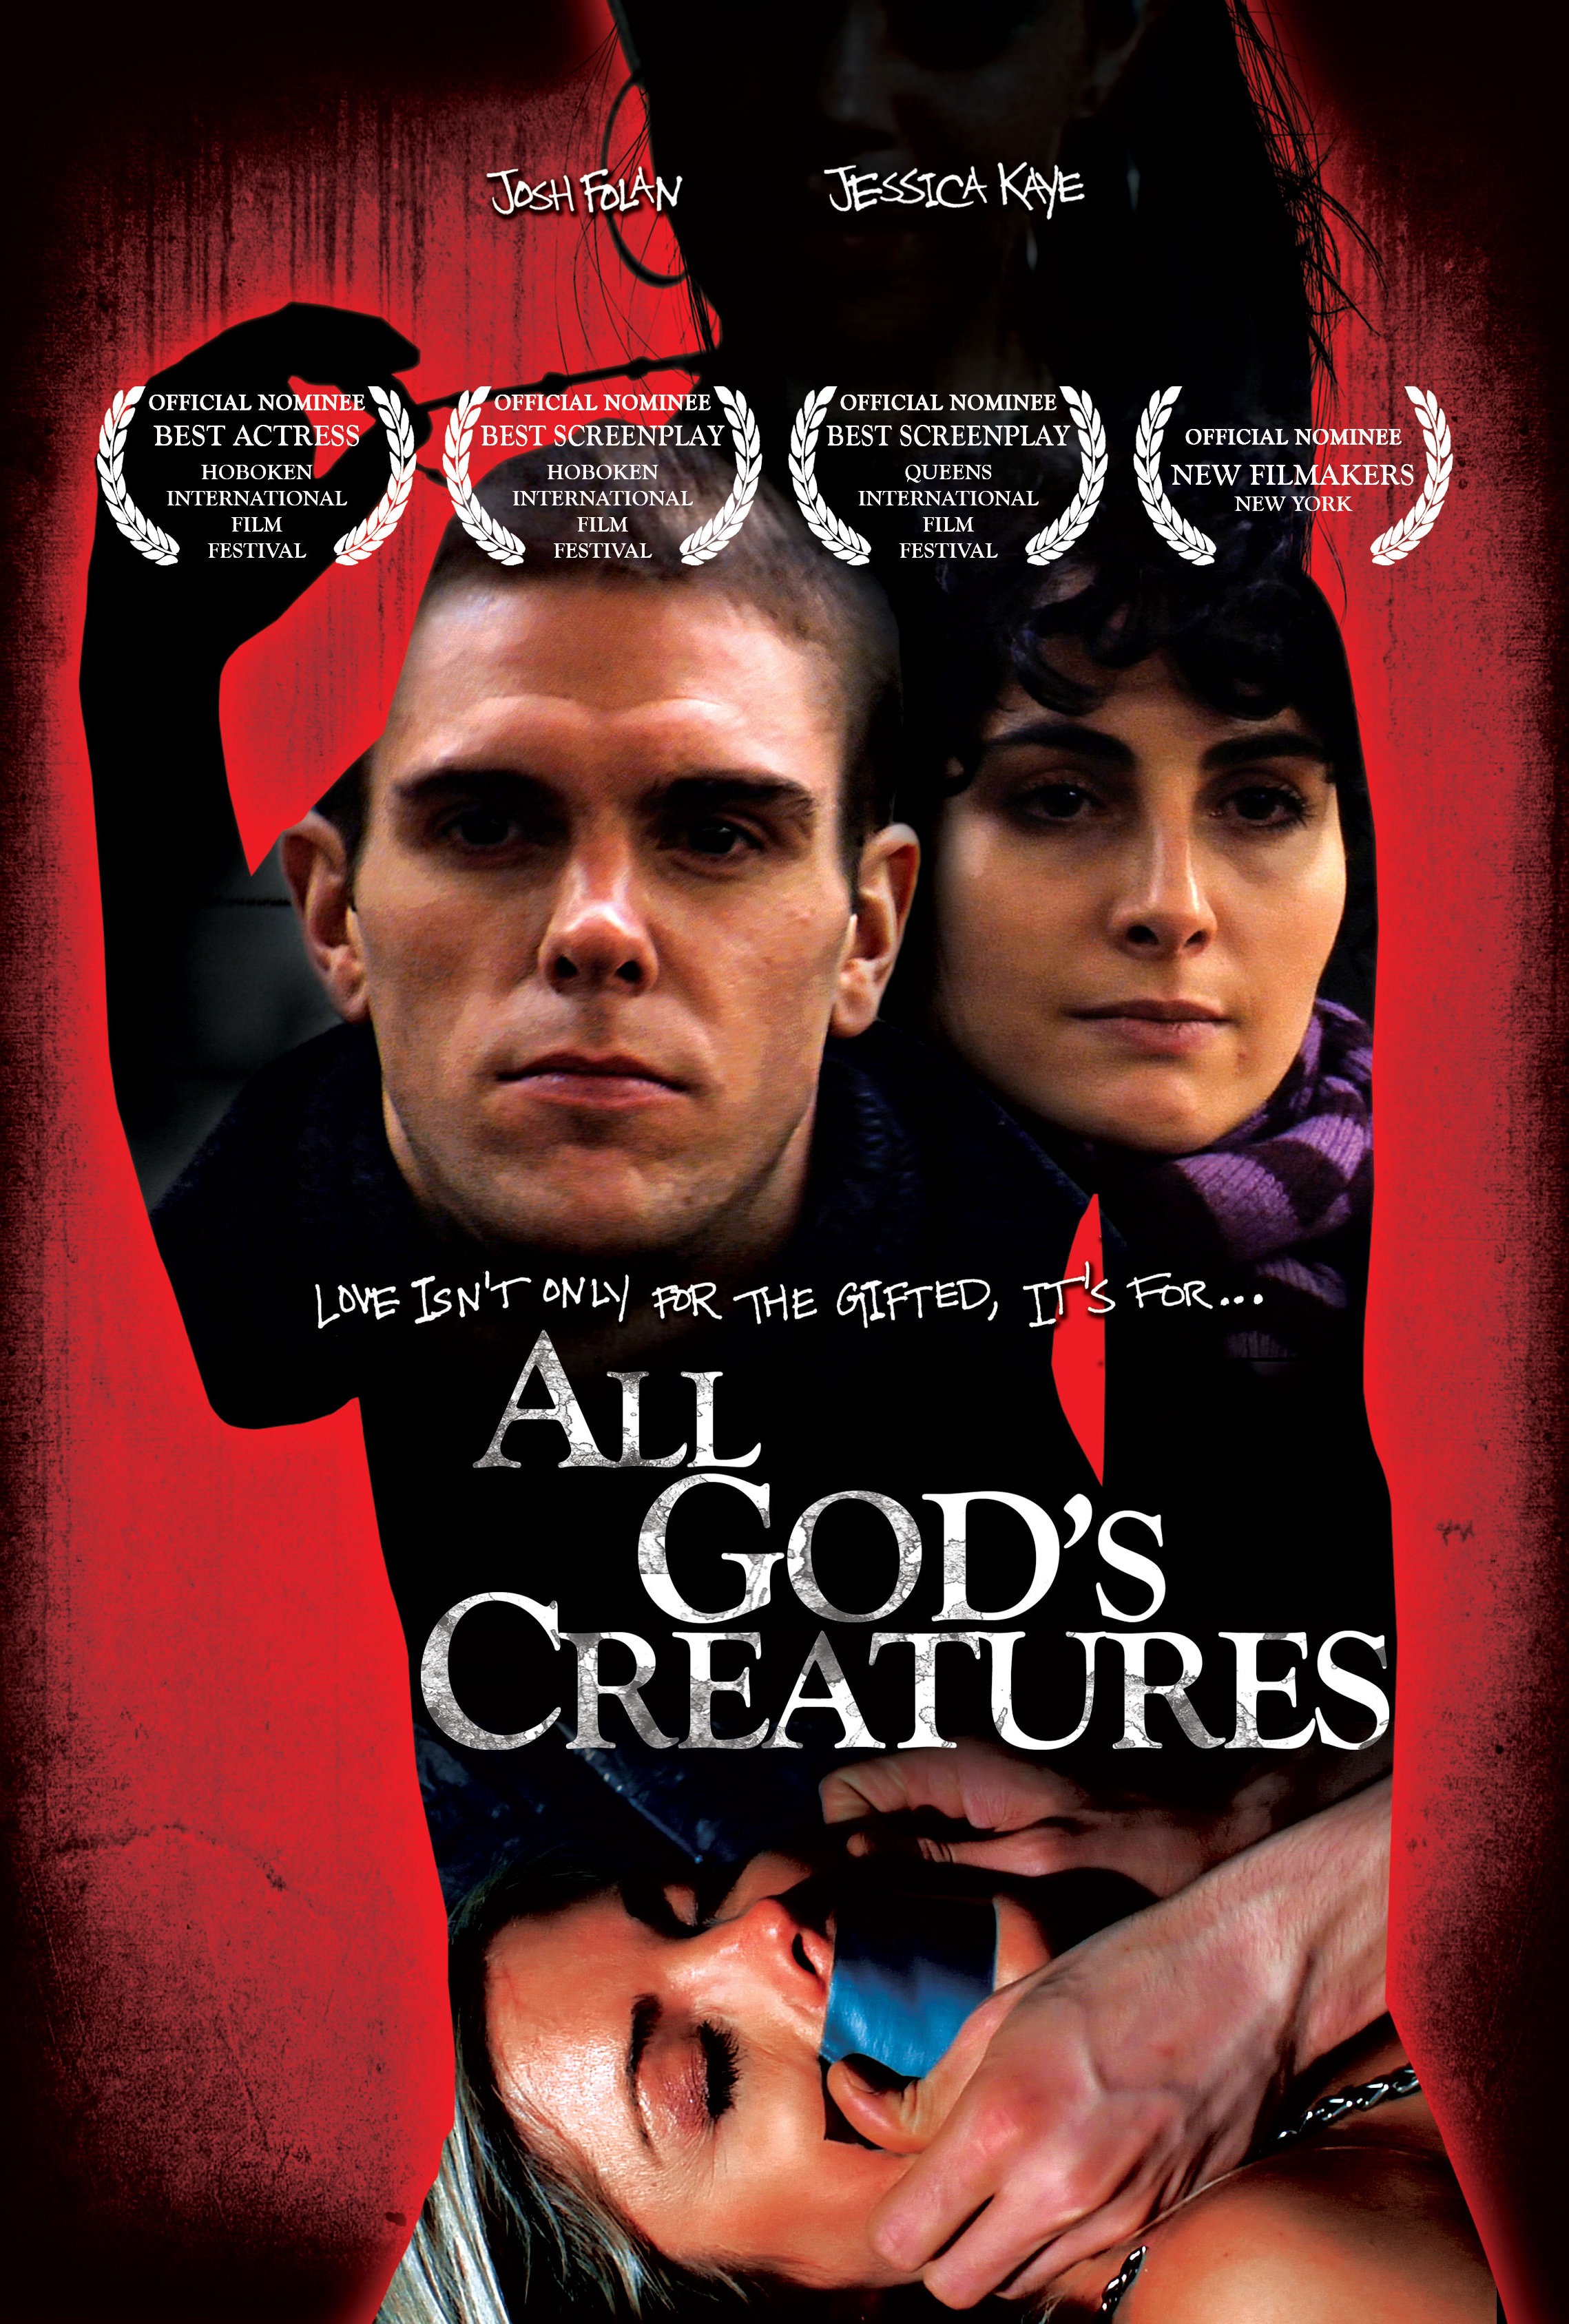 Christy Prais, Matt Jared, Josh Folan, Ginger Kroll, Jessica Kaye, Frank Licata and Ryan Charles in All God's Creatures (2011)